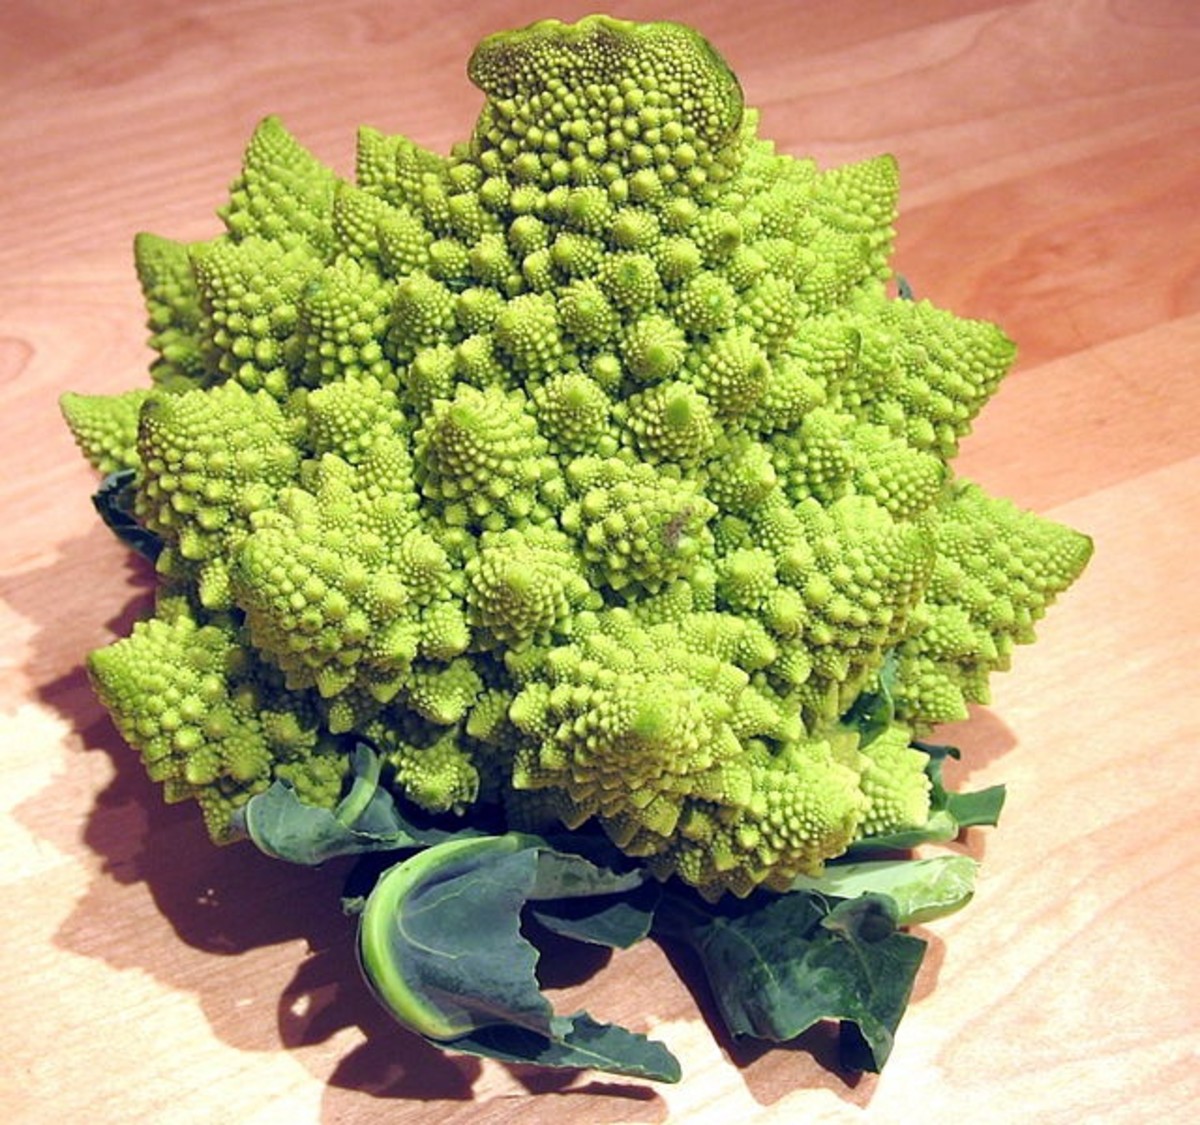 Broccoli Romanesco (another variety of green cauliflower)